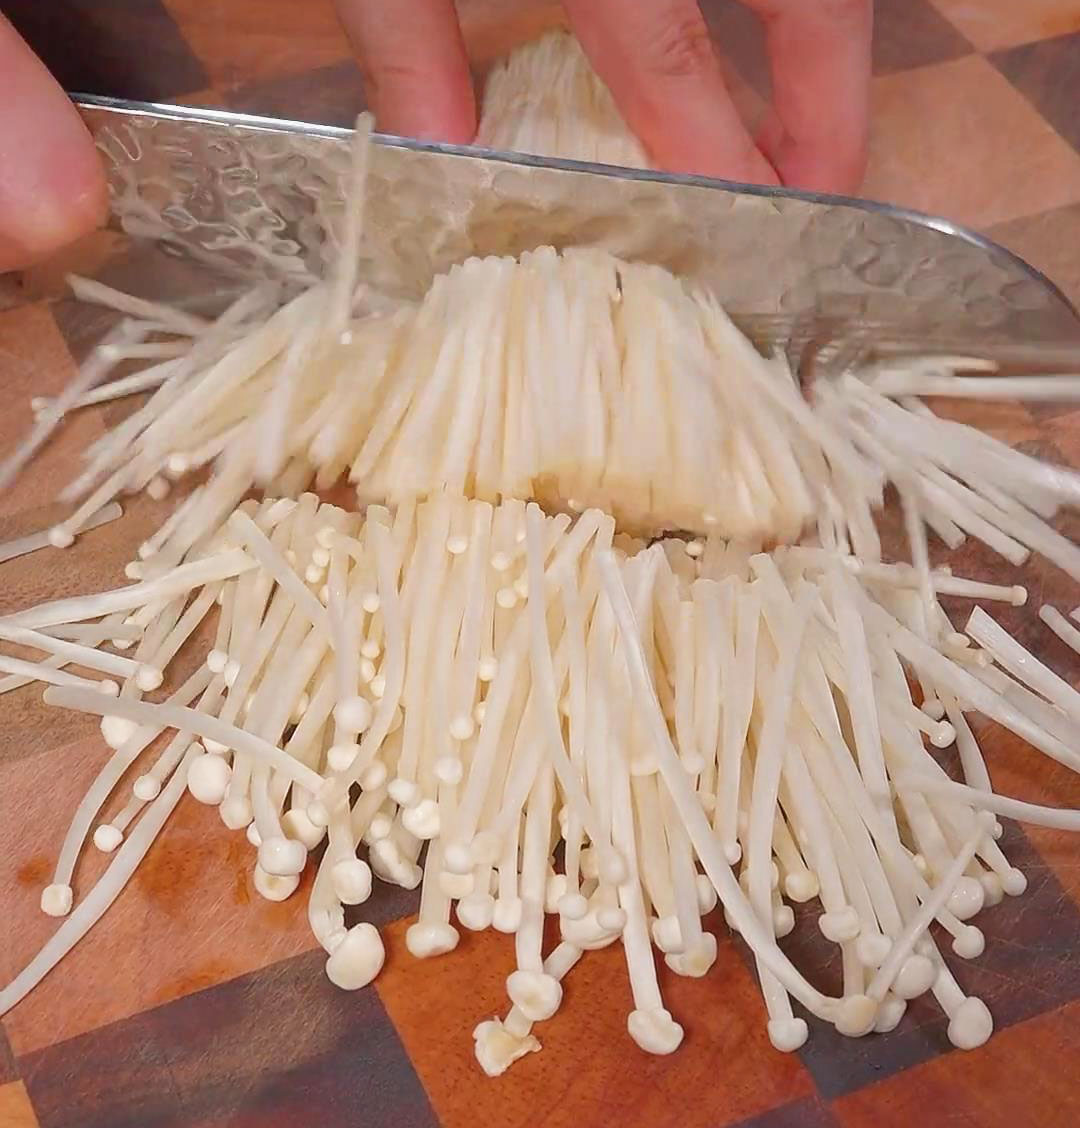 chop the enoki mushrooms into three slices